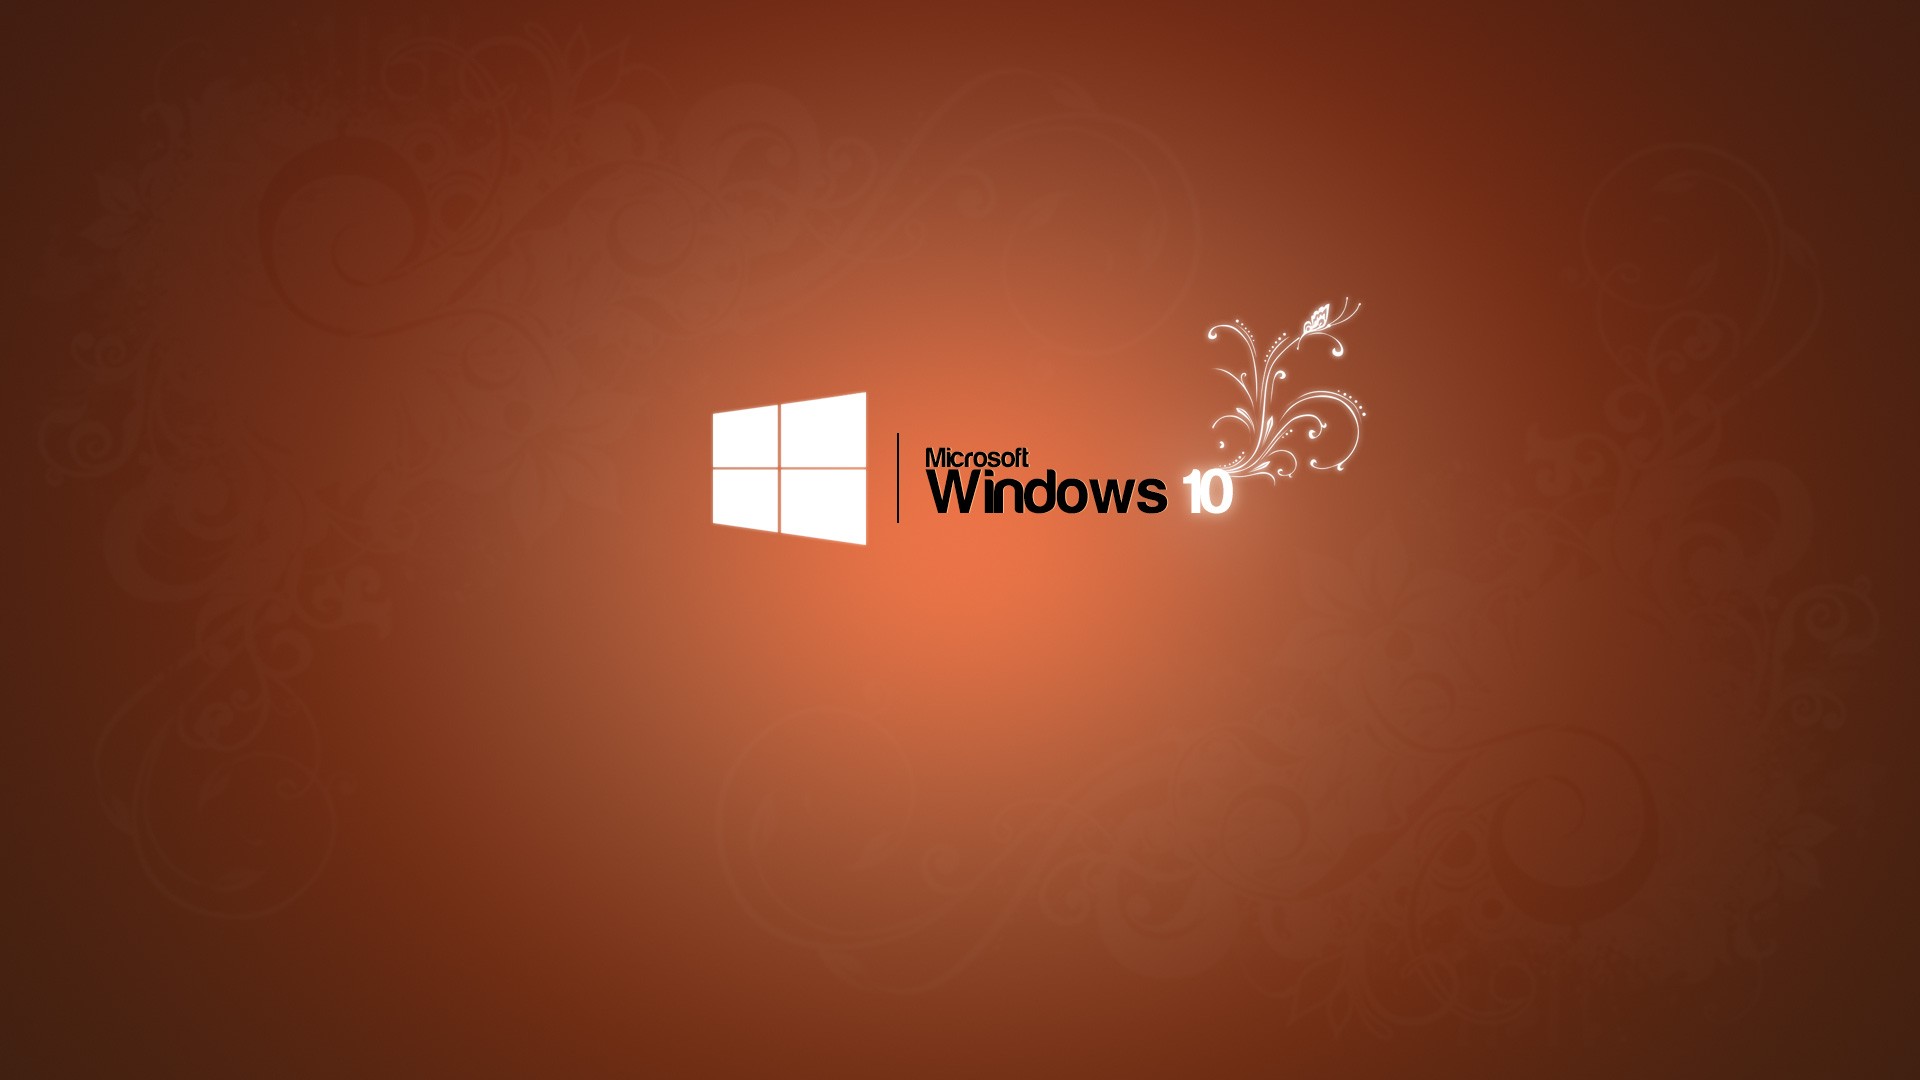 Windows 10 Ubuntu Background 1920x1080 Wallpaper Teahub Io